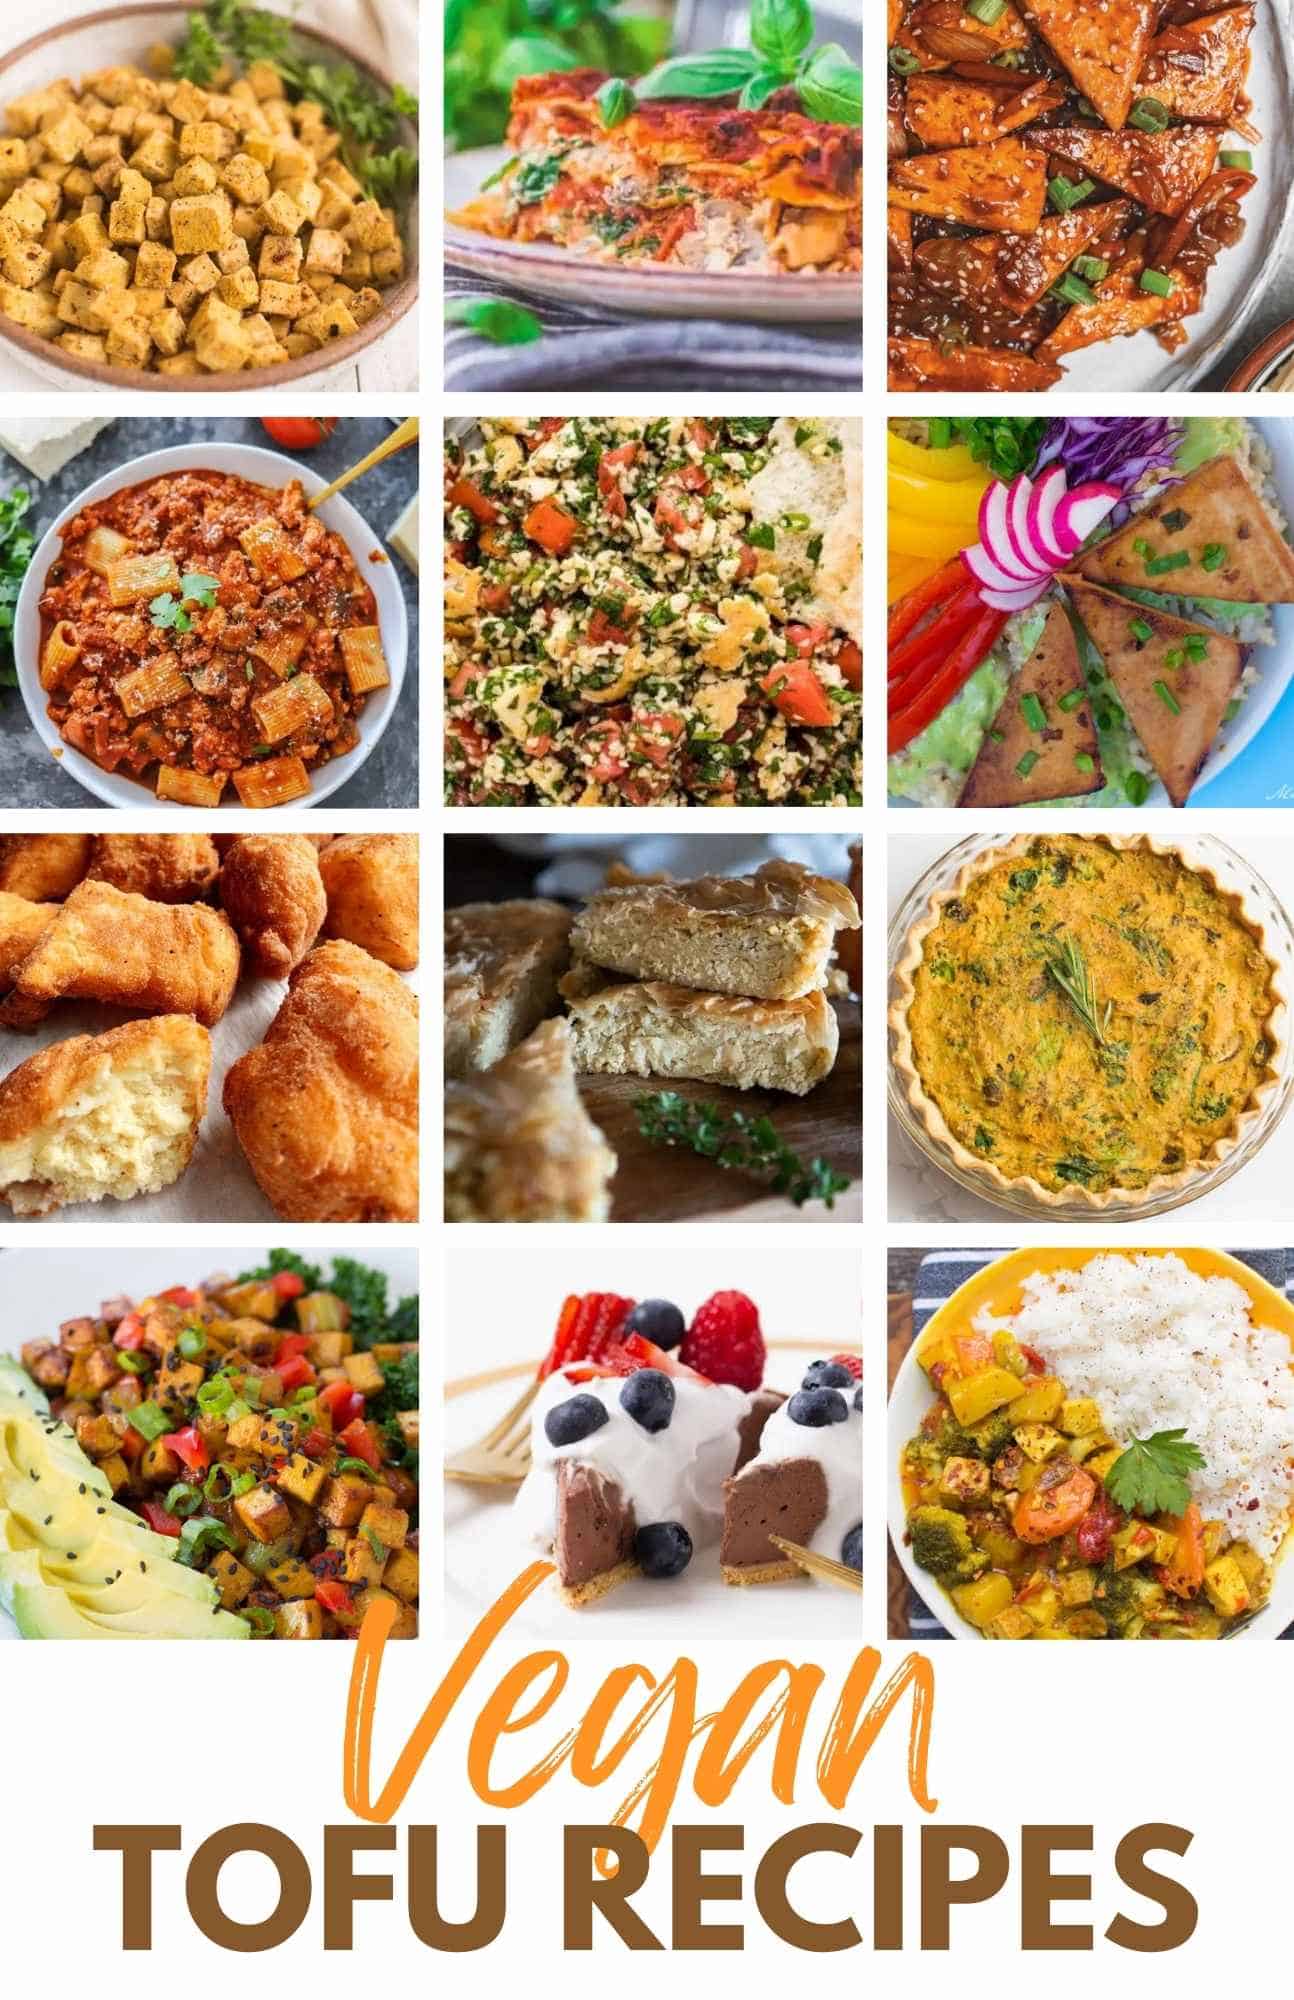 Best Vegan Tofu Recipes Collage of Photos from Breakfast through Dessert